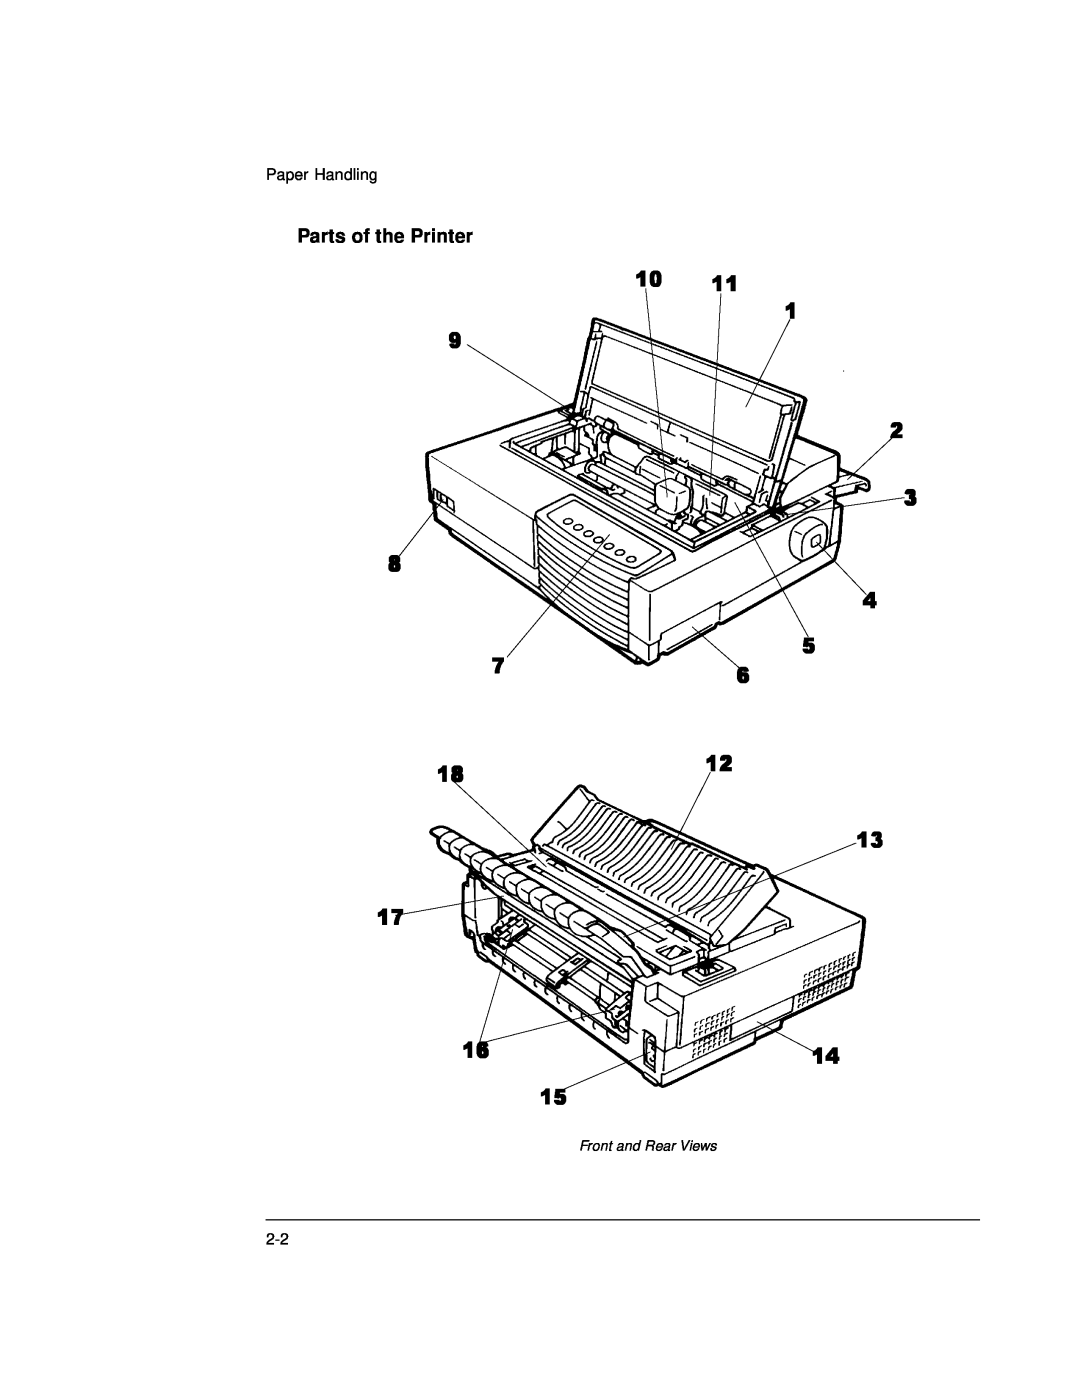 Genicom LA36 manual Parts of the Printer, Paper Handling, Front and Rear Views 